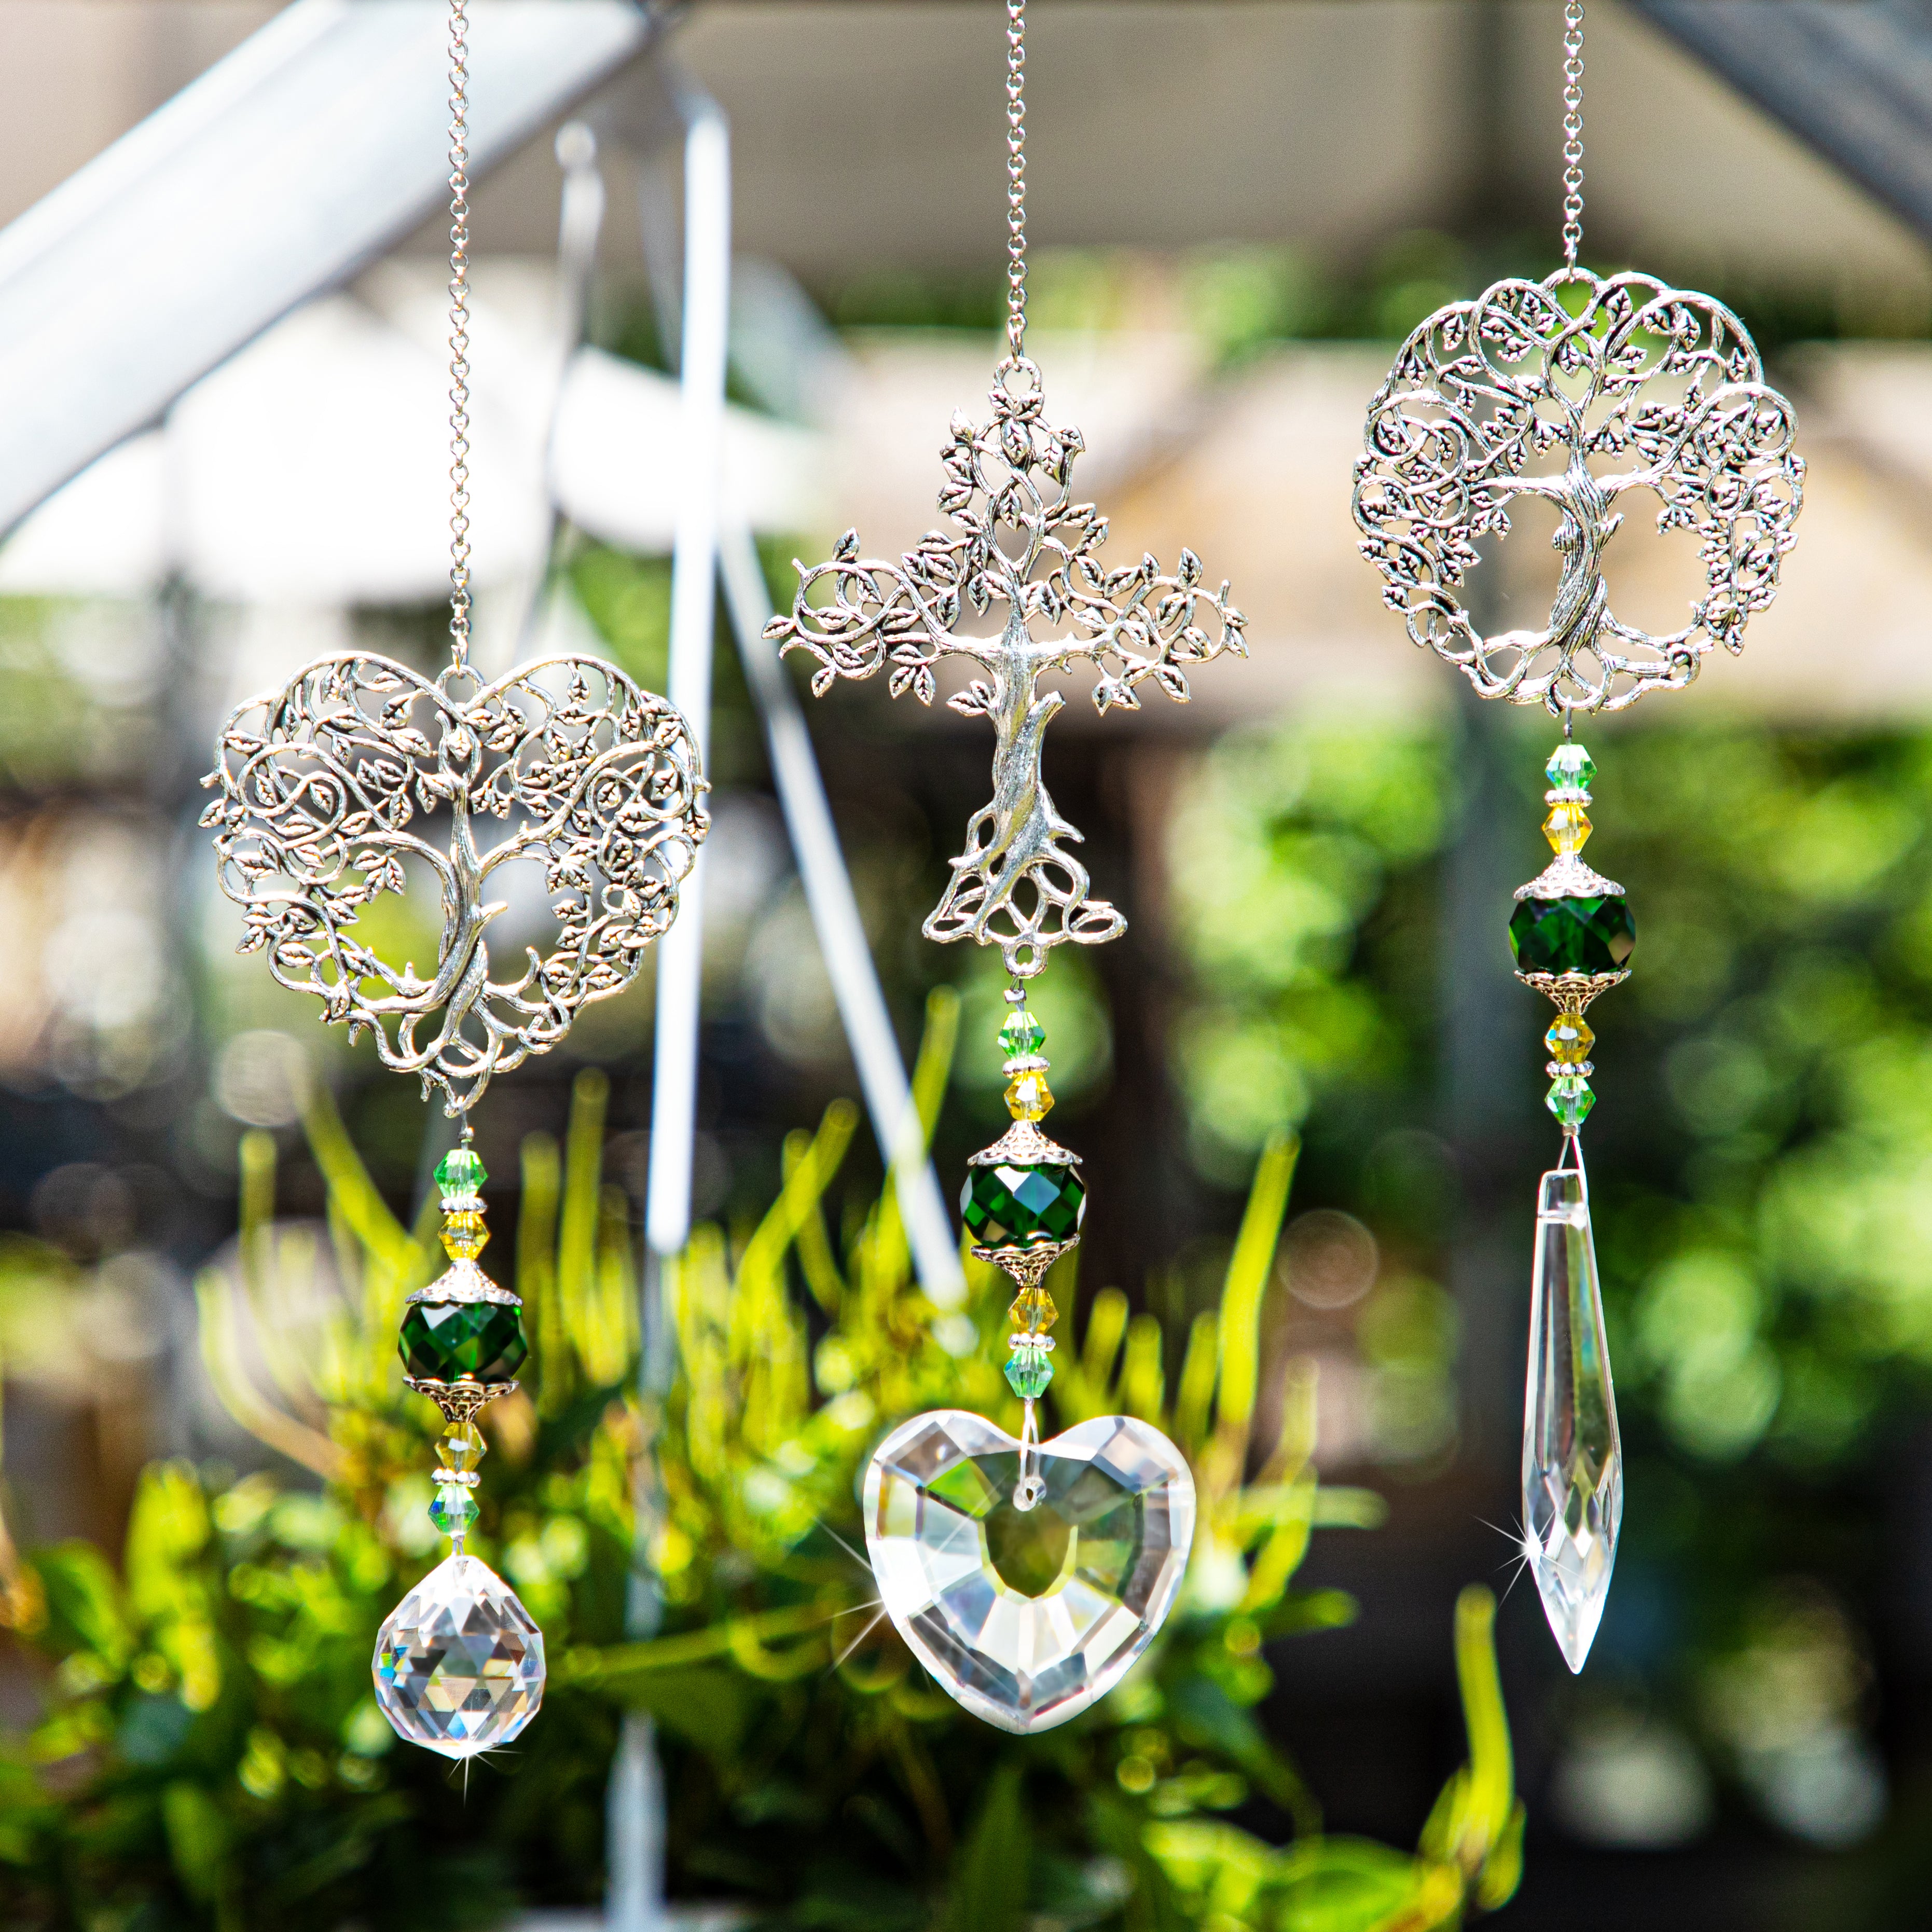 Tree of Life Sun Catcher Hanging Ornament Handmade Rainbow Crystal Prisms Drops Decor